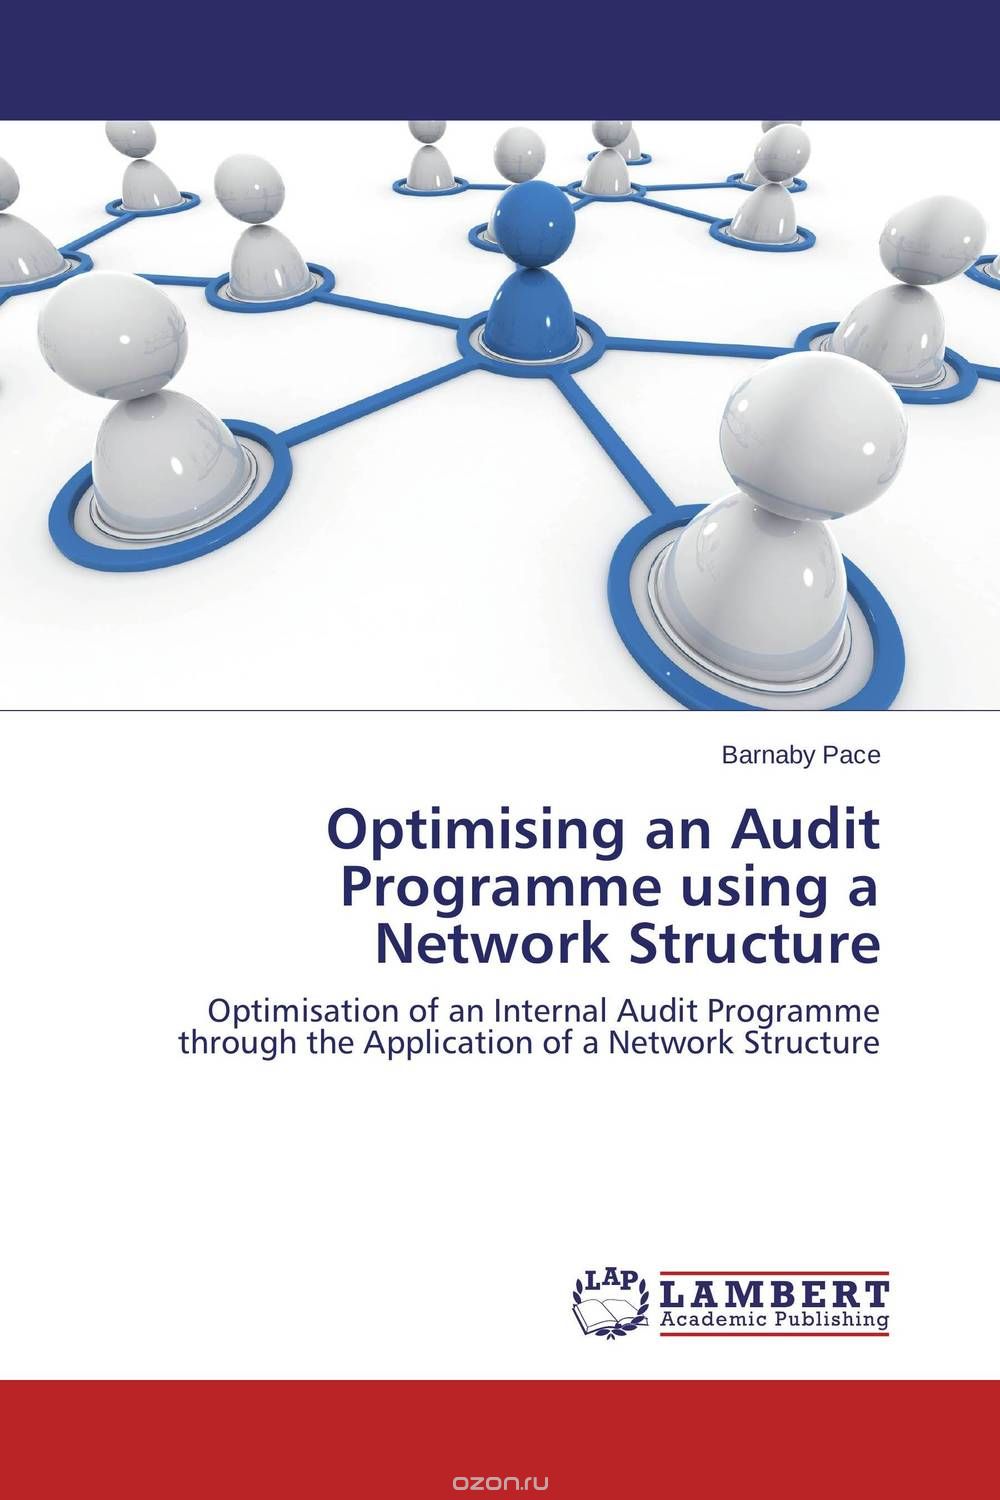 Скачать книгу "Optimising an Audit Programme using a Network Structure"